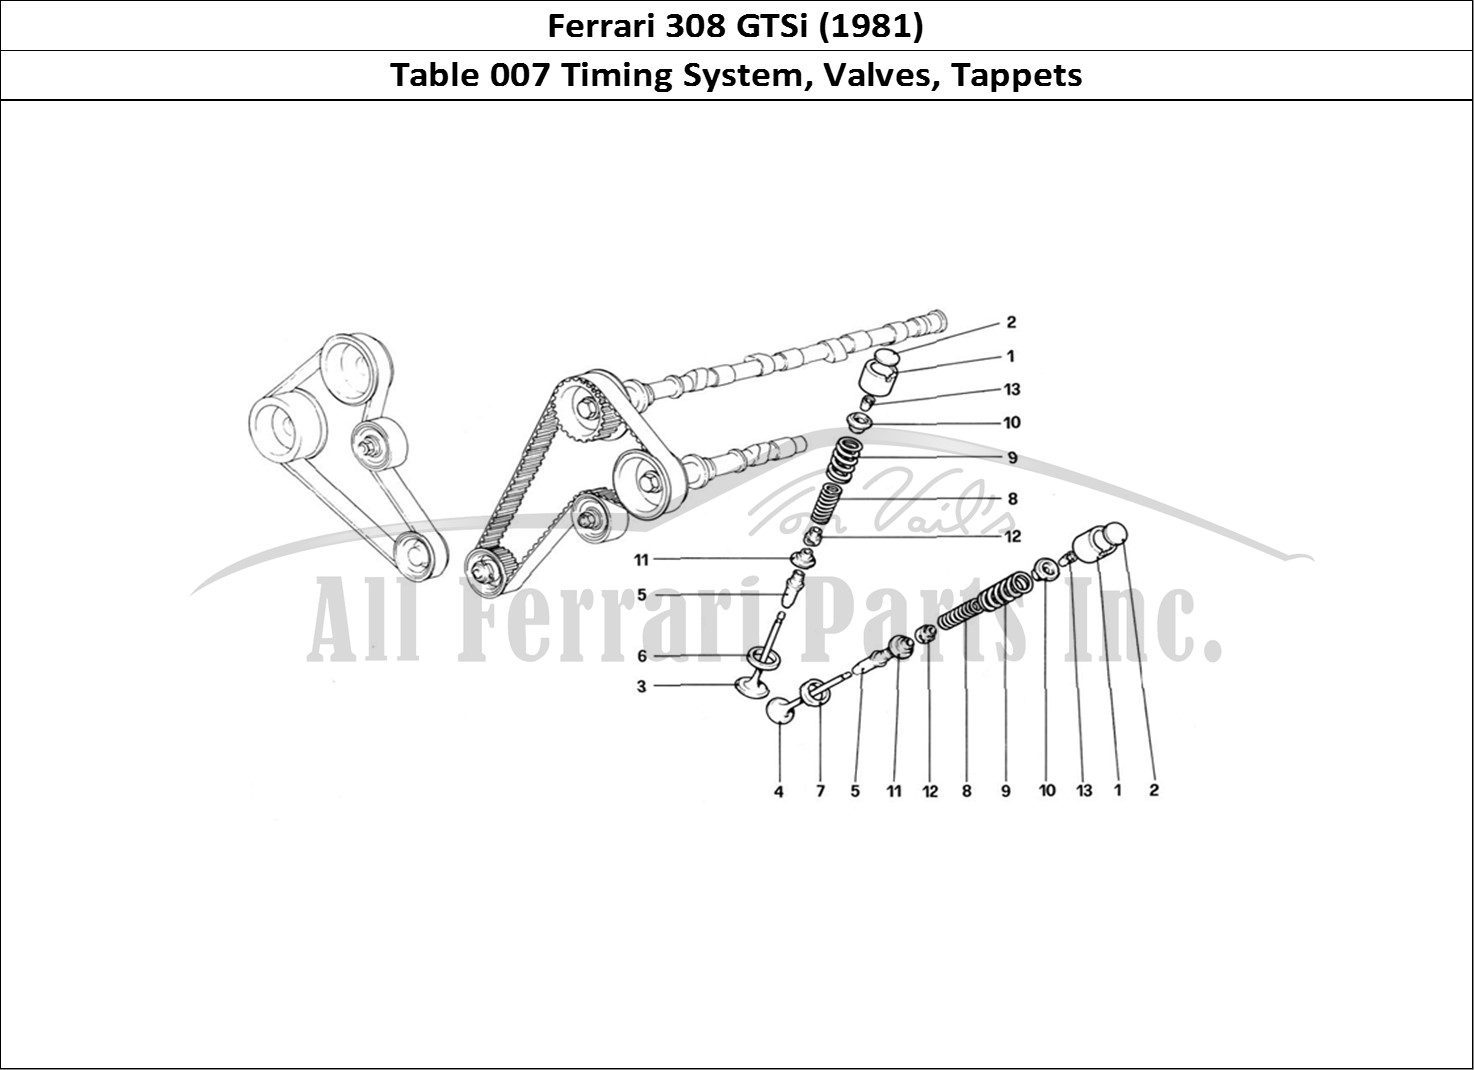 Ferrari Parts Ferrari 308 GTBi (1981) Page 007 Timing System - Tappets